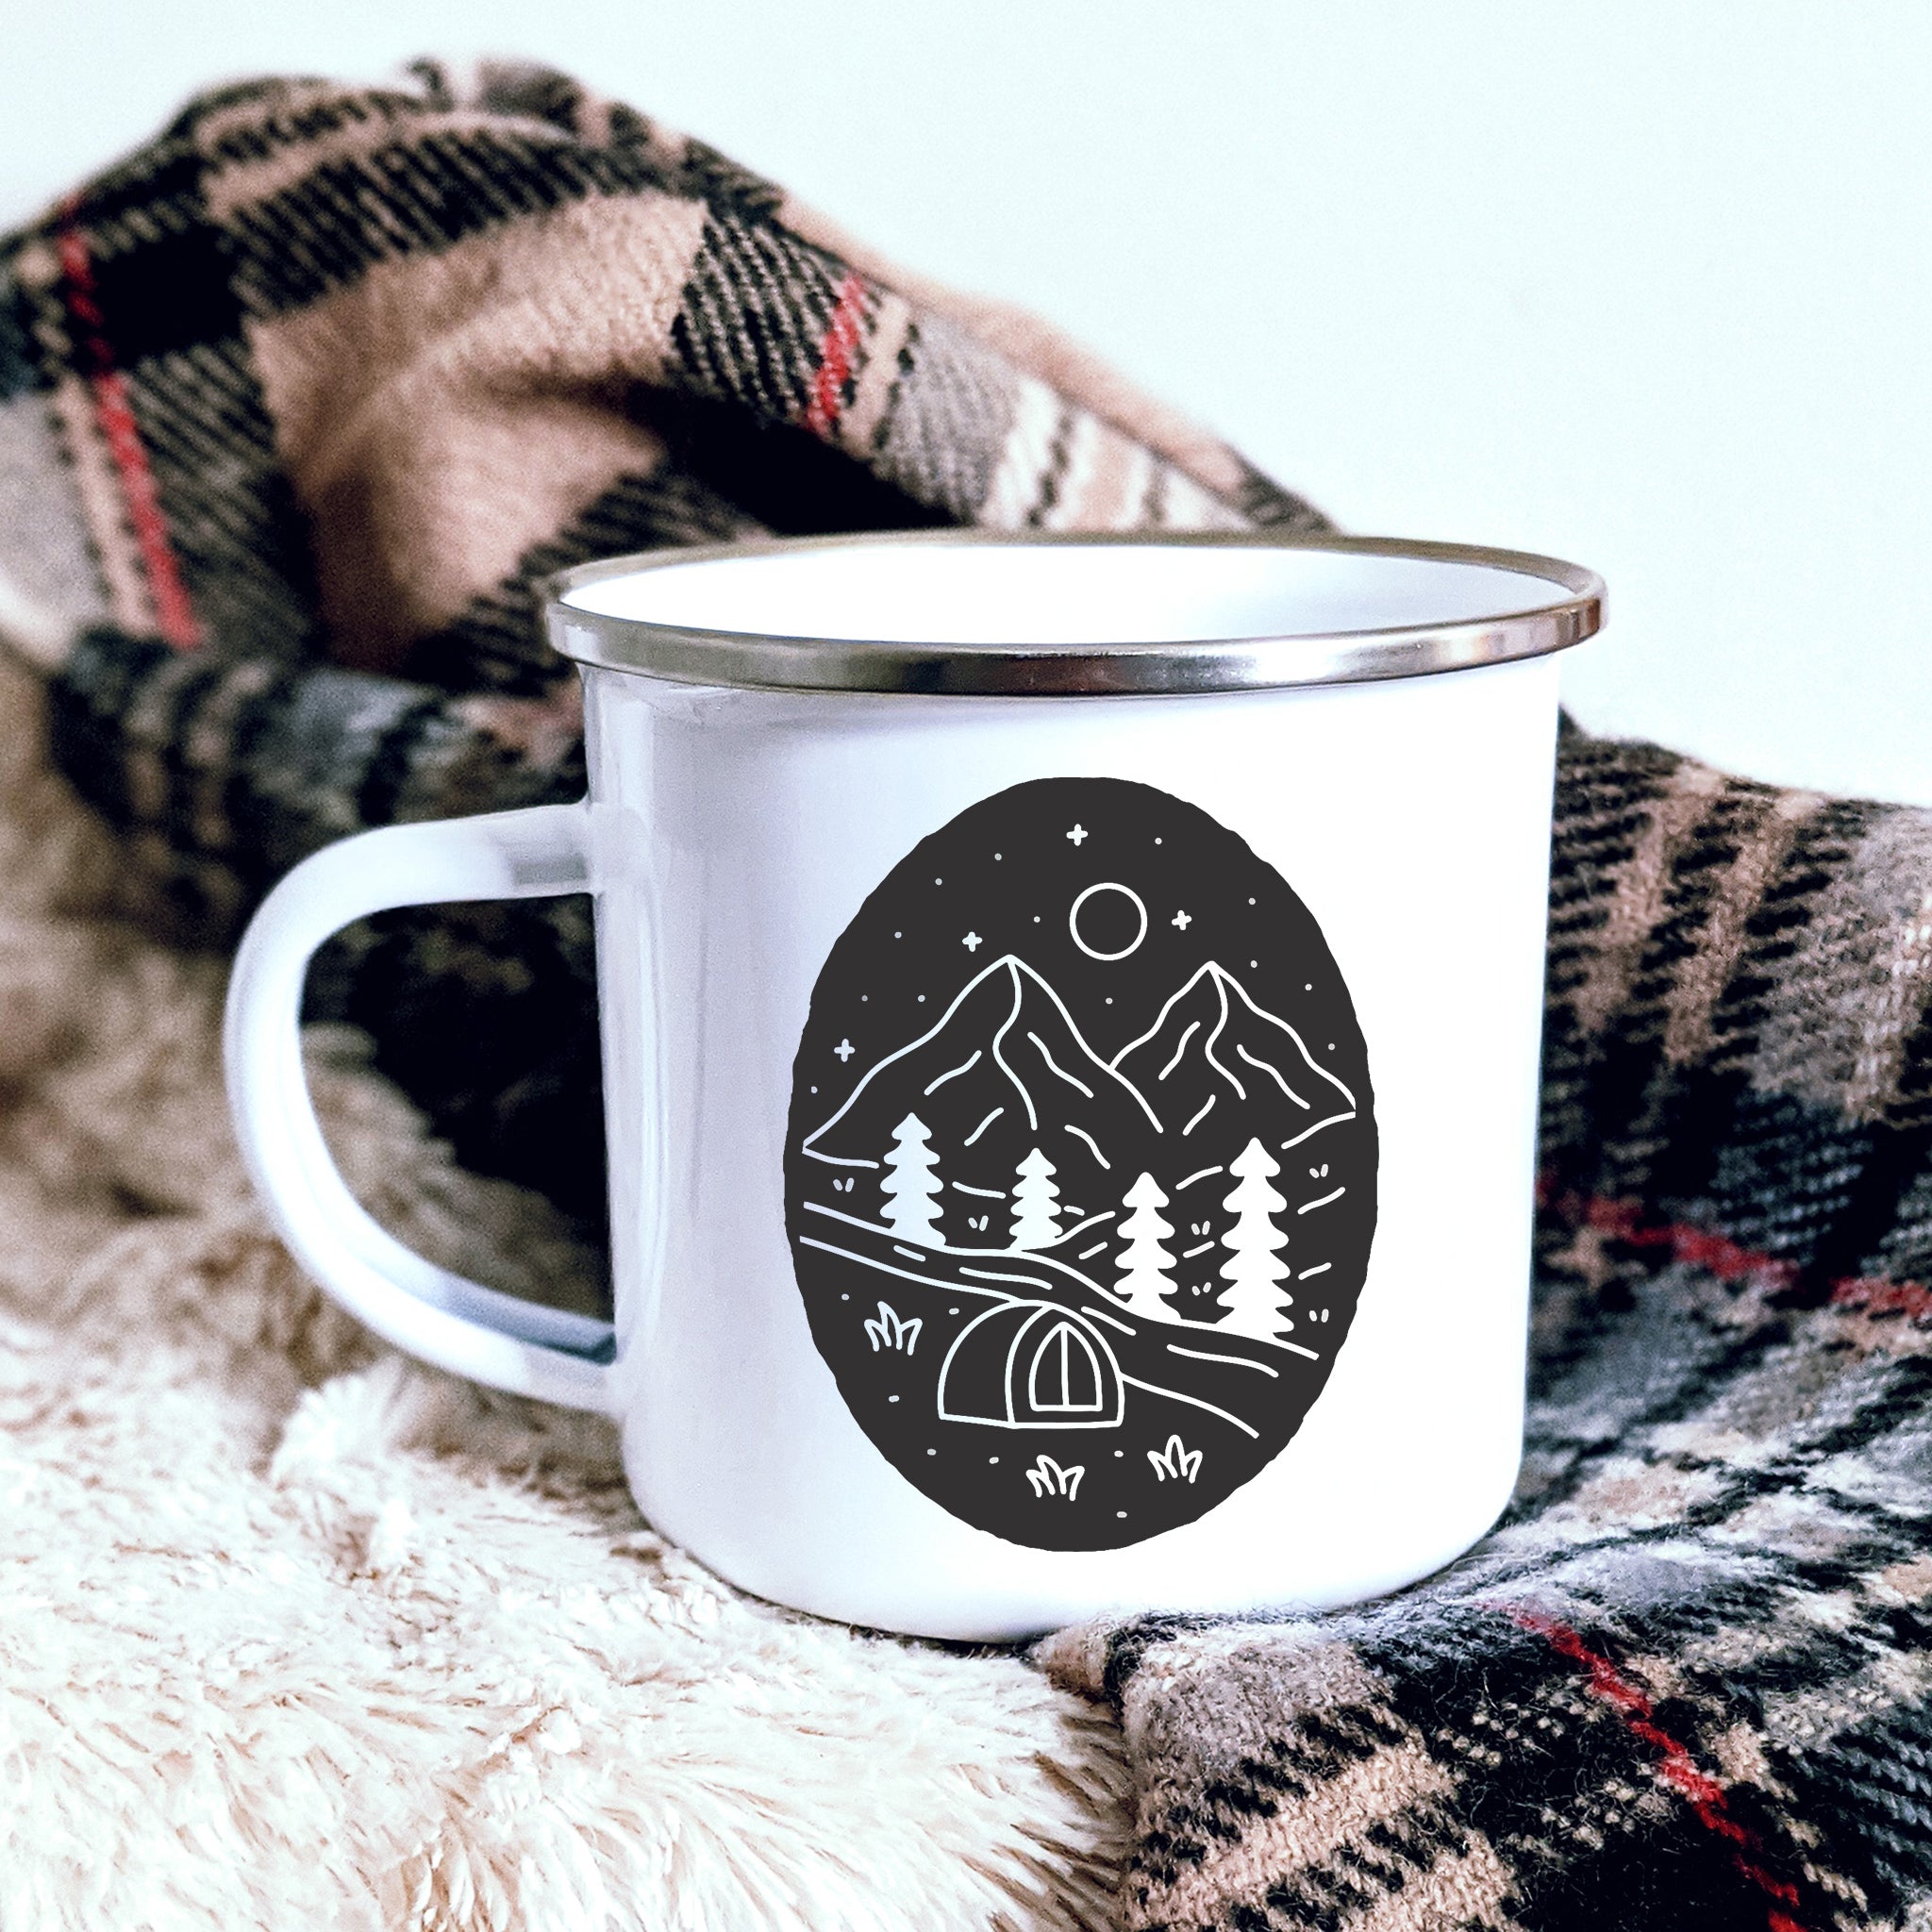 You Feel Like Home & Adventure Camping Mug